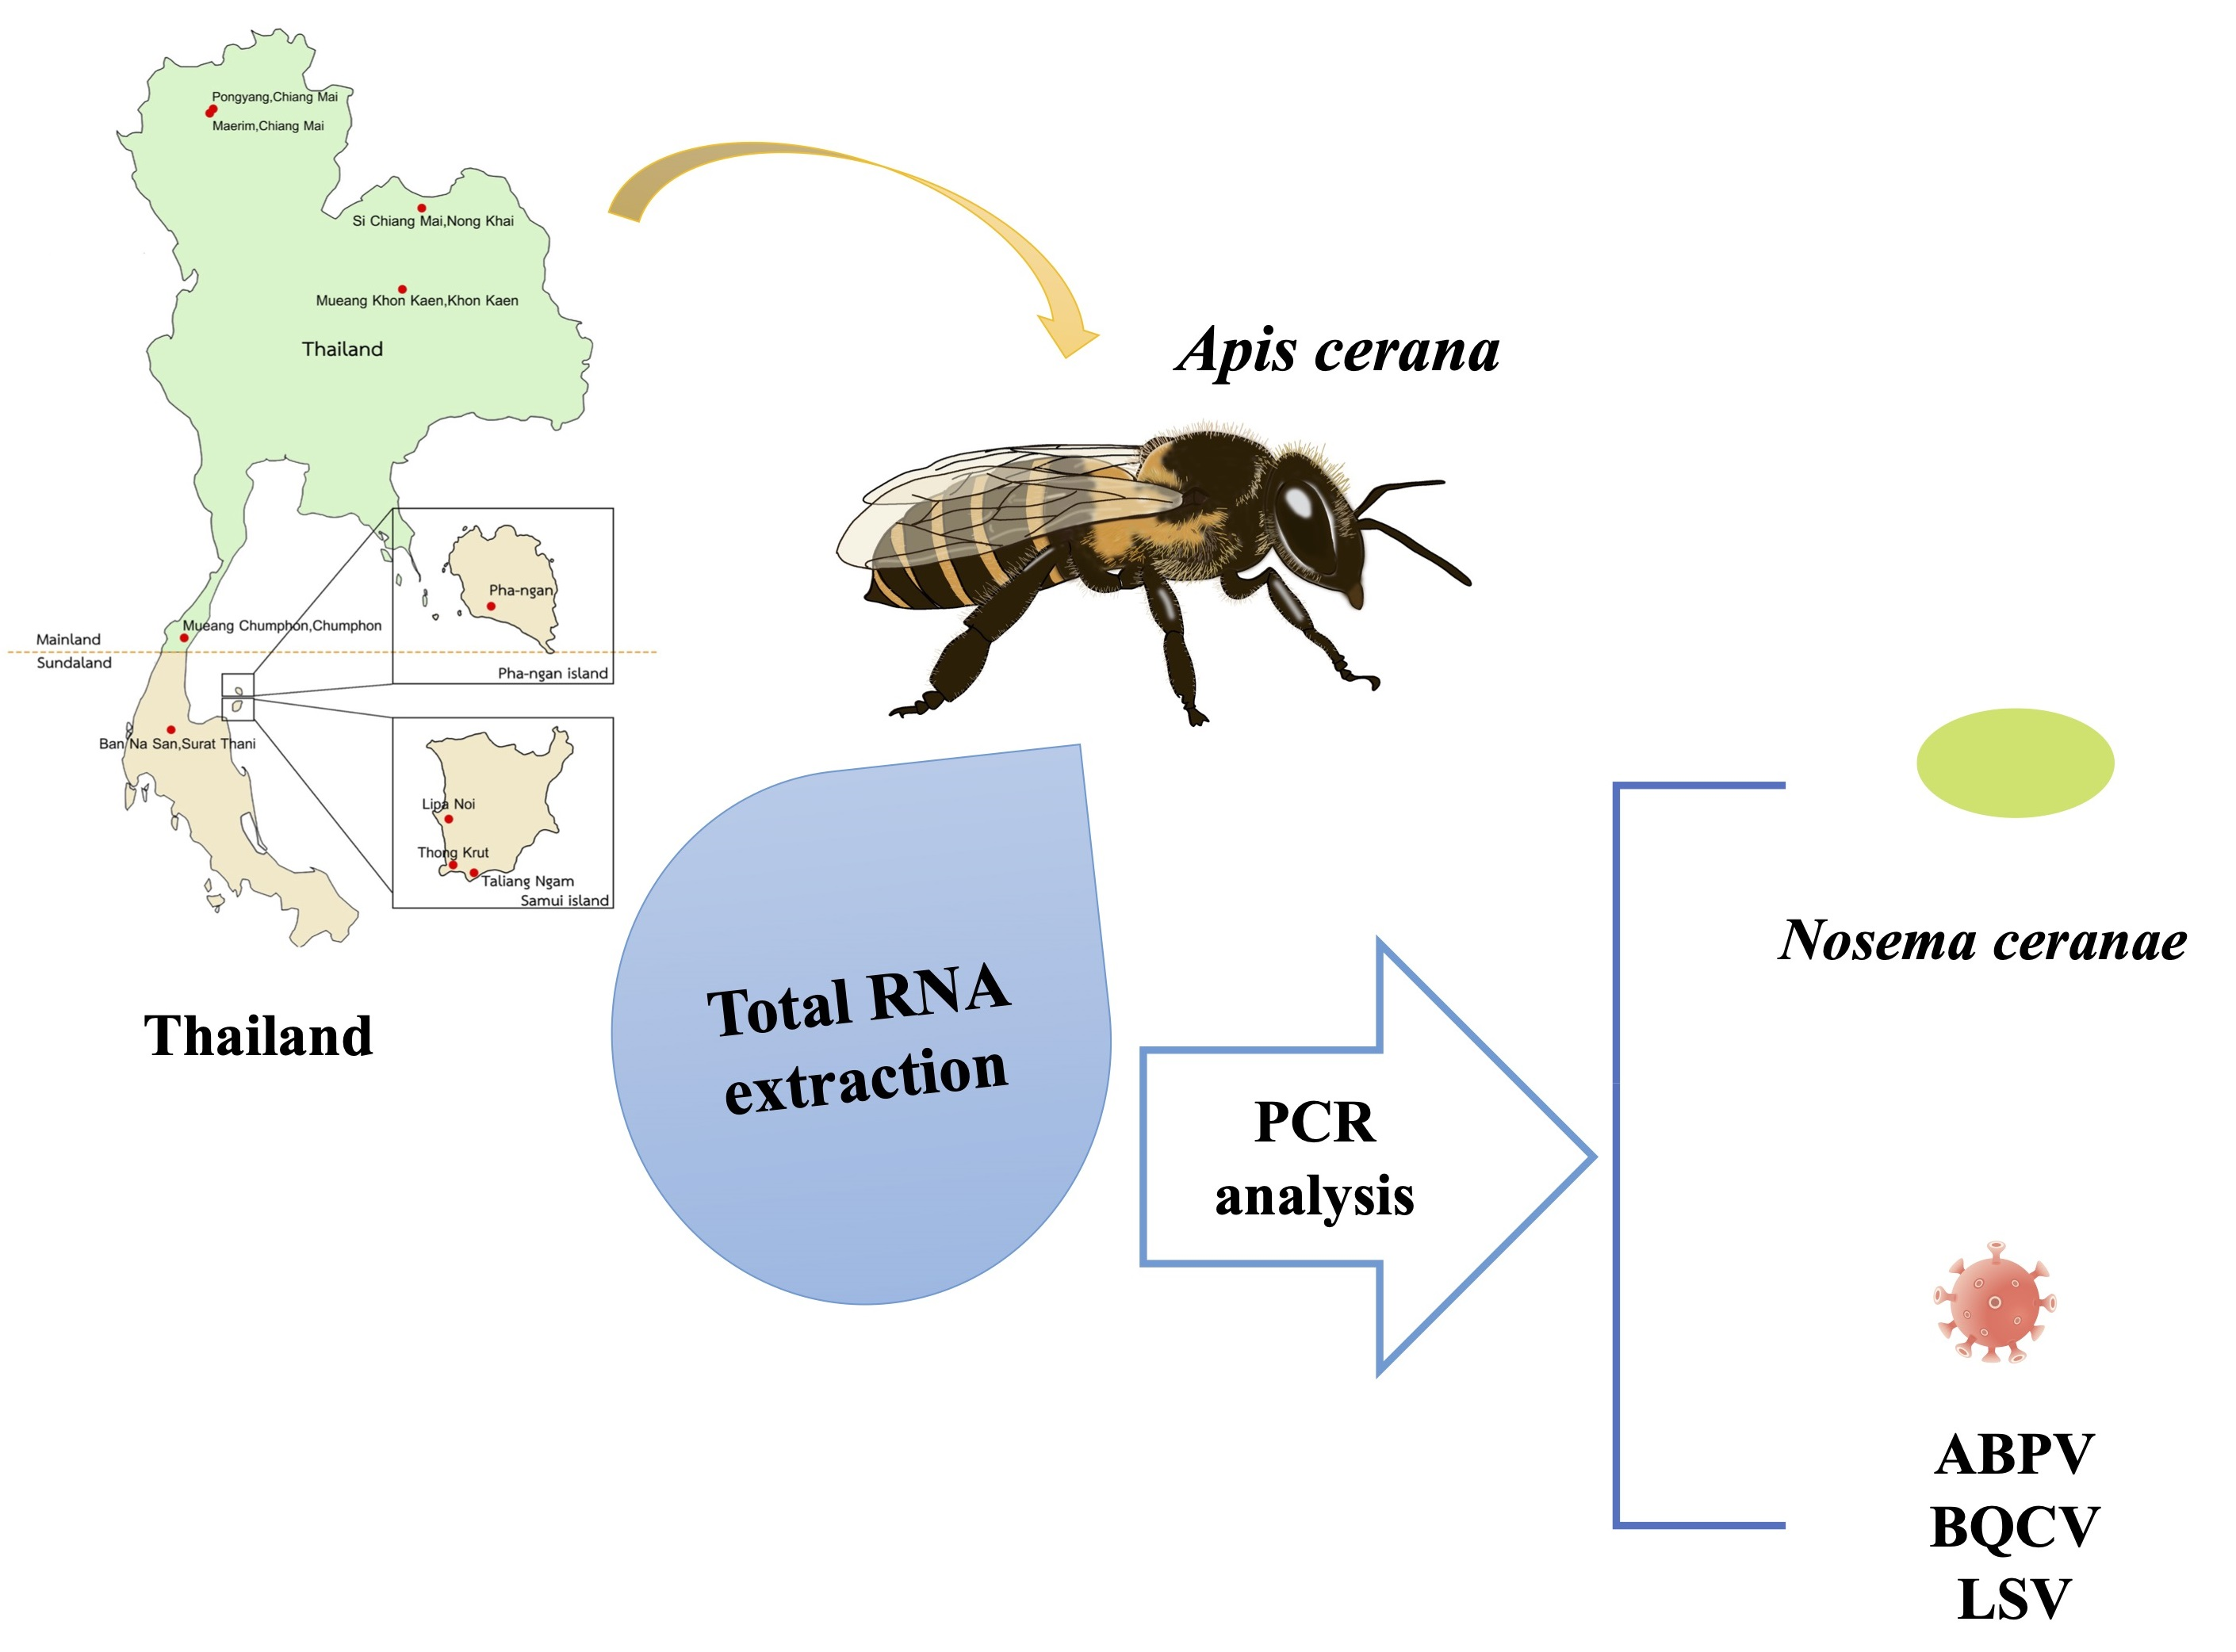 Honeybee, Characteristics, Habitat, Life Cycle, & Facts